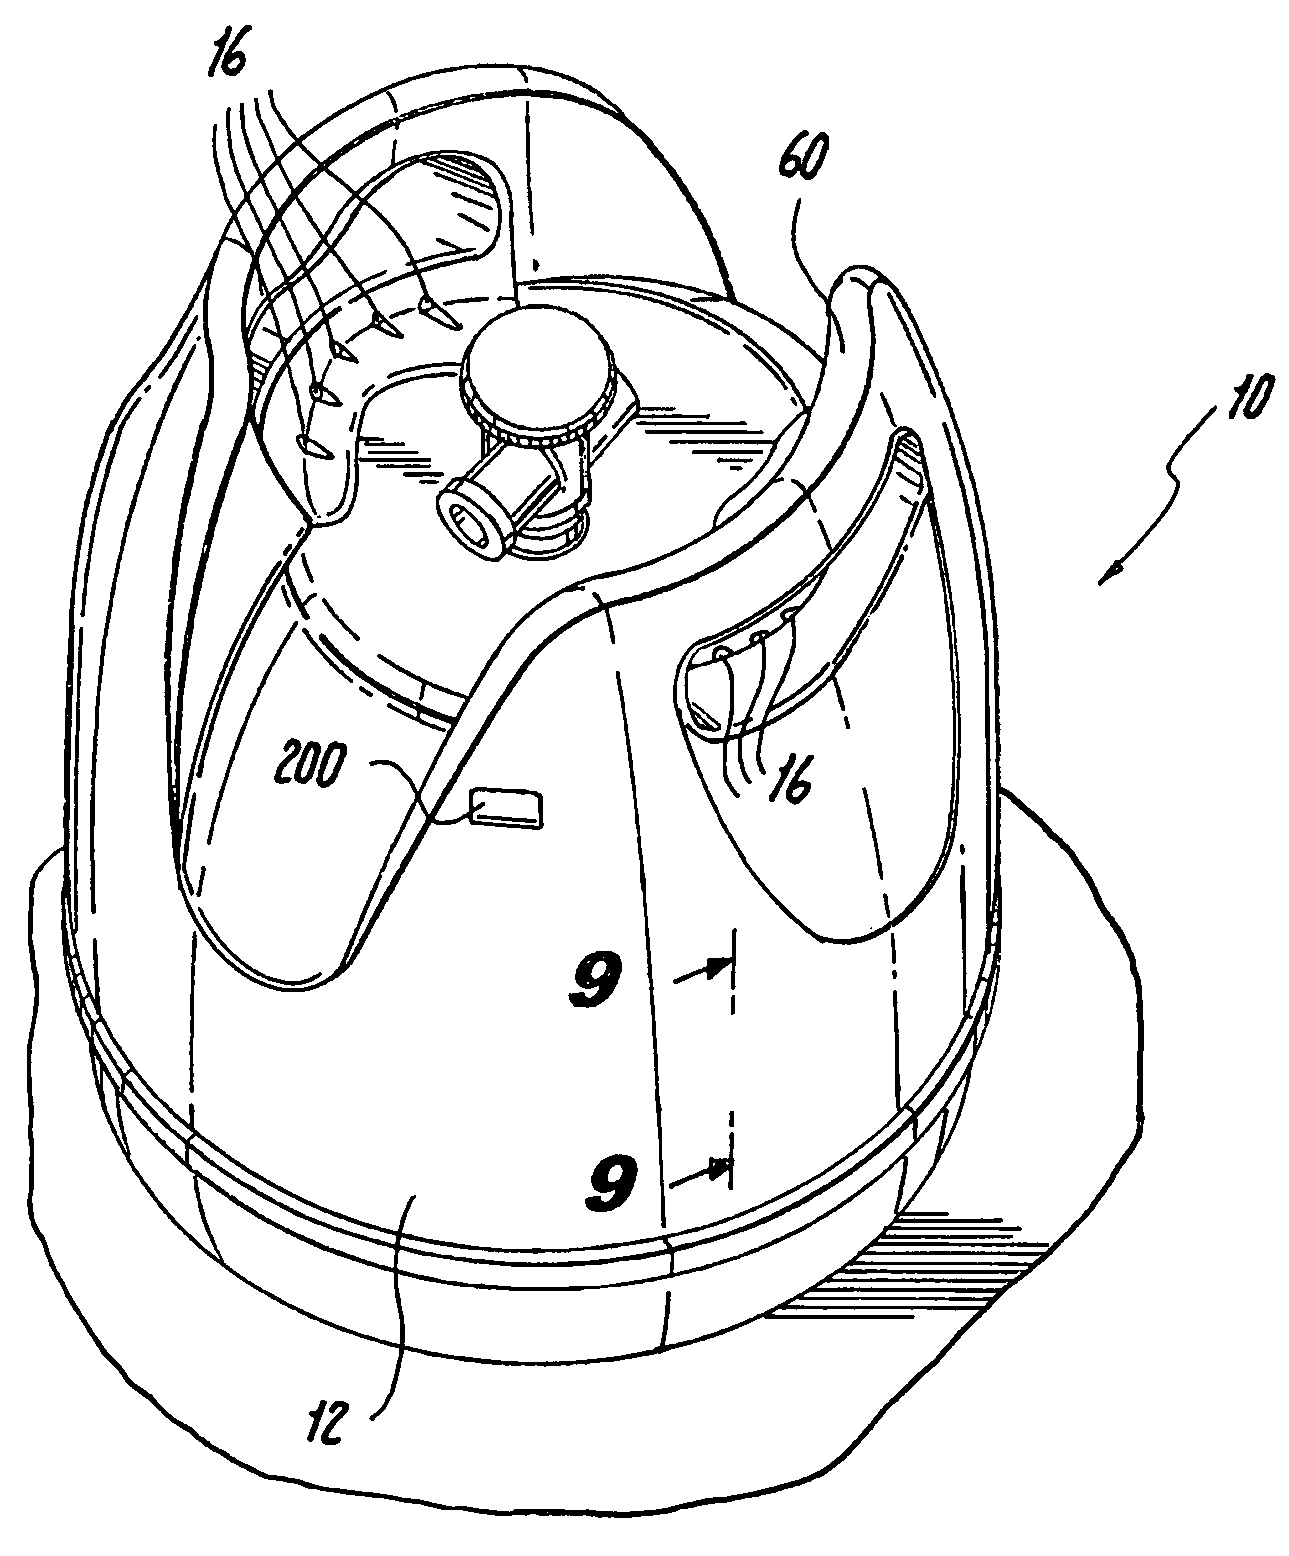 Hybrid pressure vessel with separable jacket